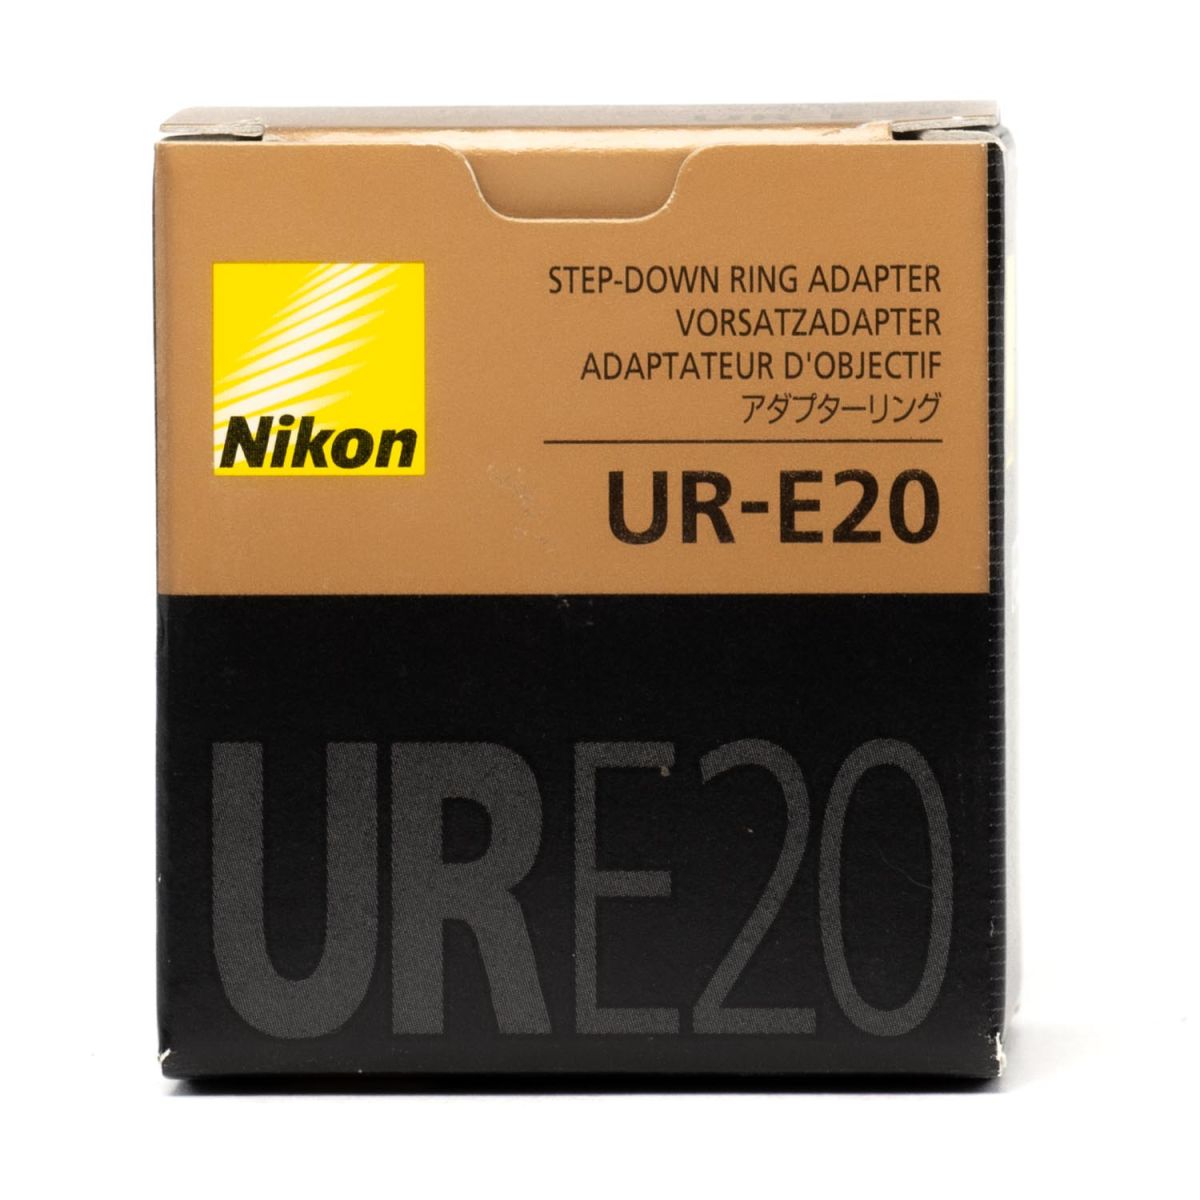 Nikon Adaptateur d'Objectif UR-E20 *Neuf!*